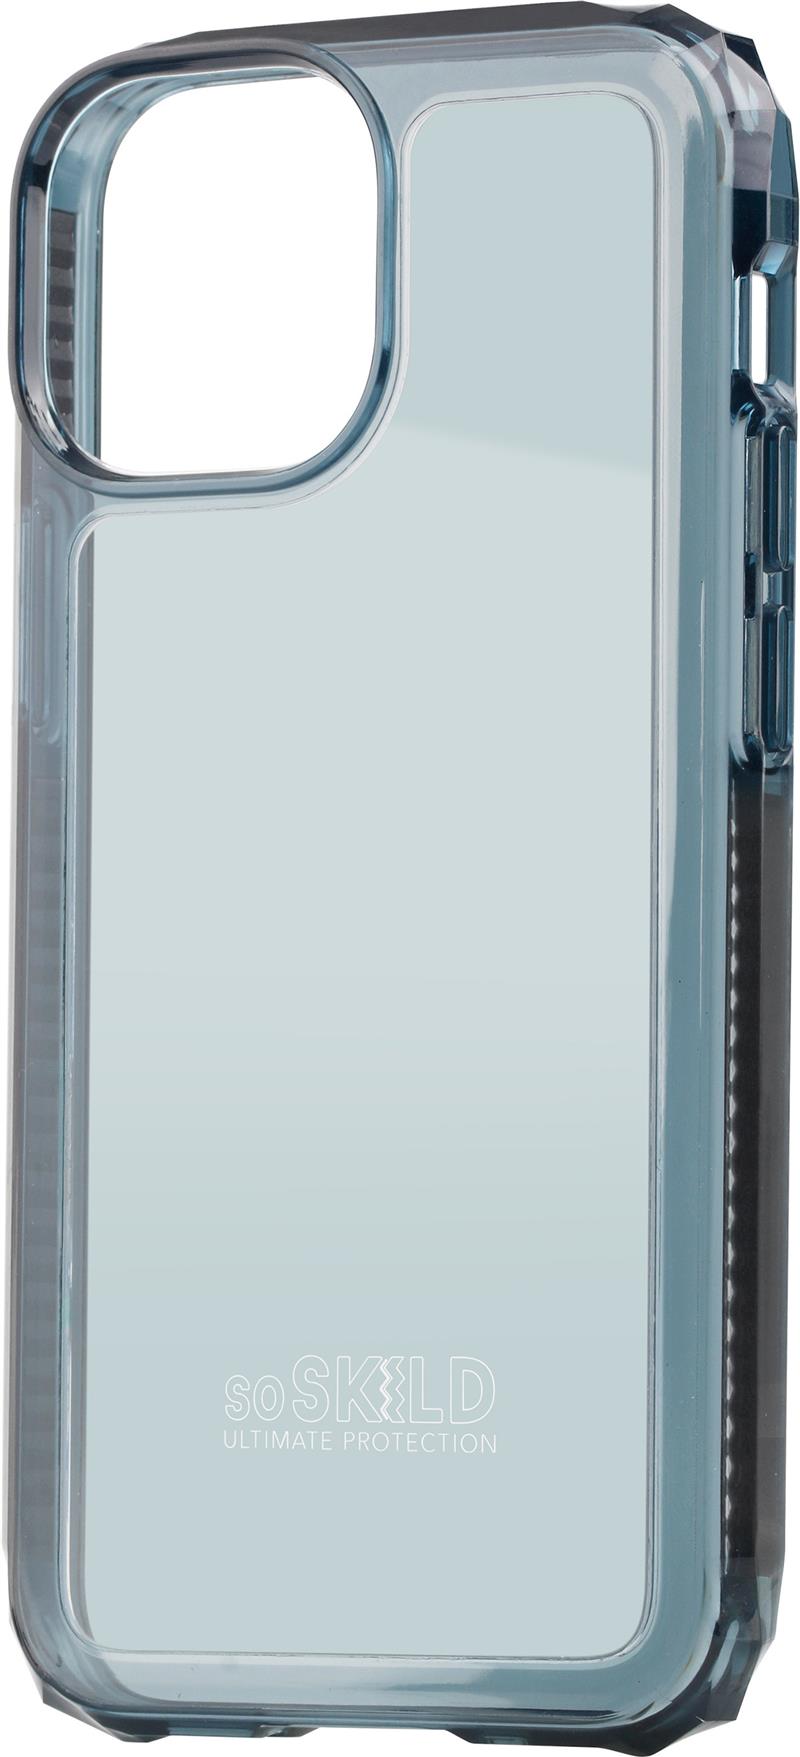 SoSkild iPhone 13 Mini Defend Heavy Impact Case - Smokey Grey